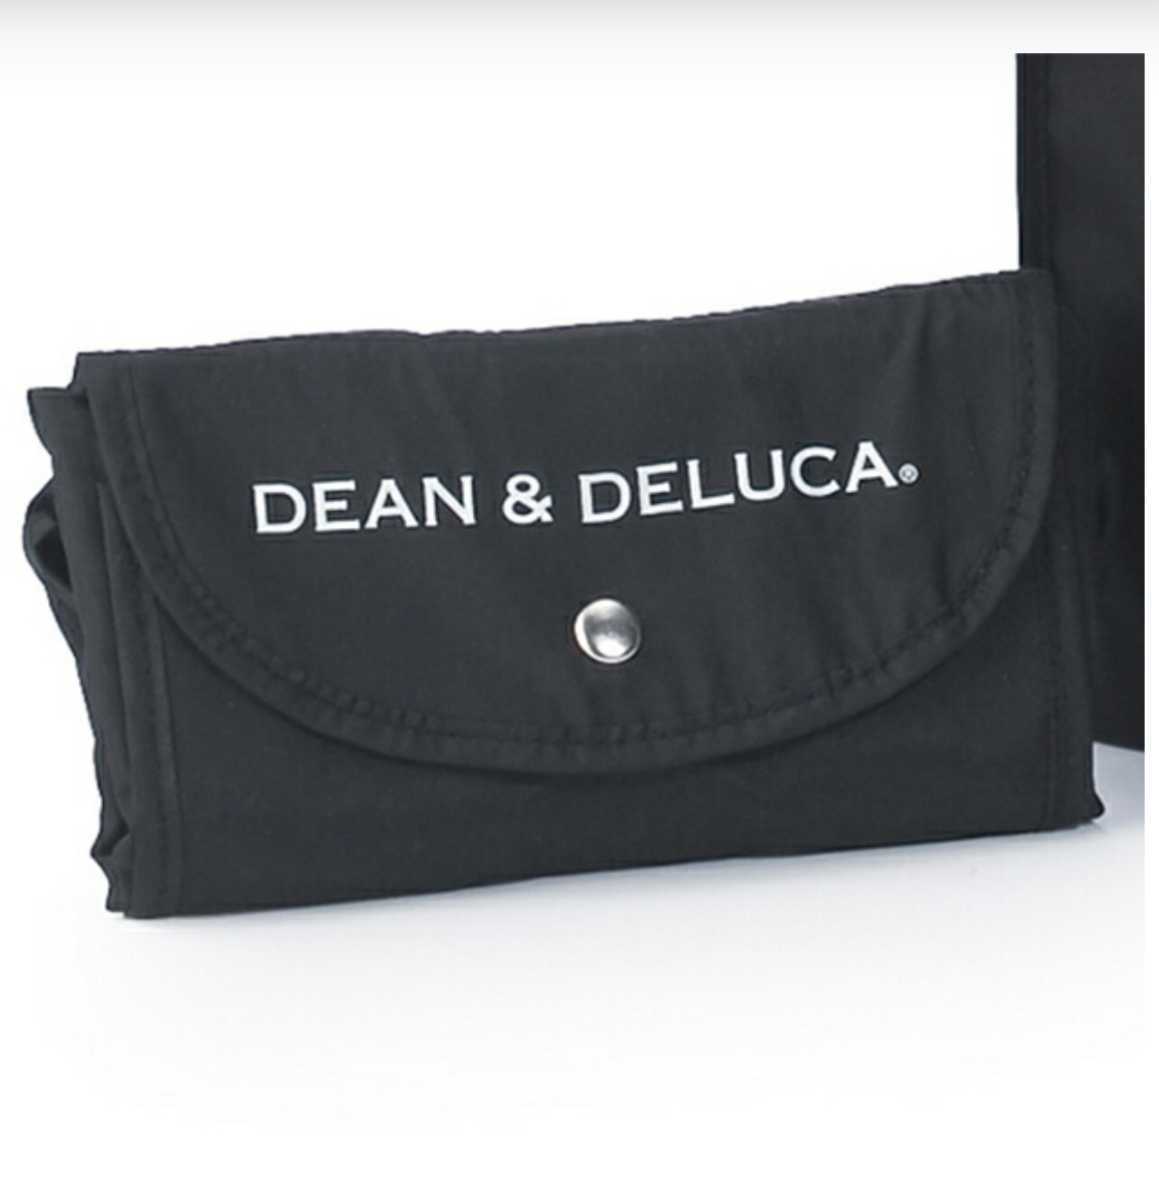 DEAN&DELUCA ショッピングバッグ ブラック 黒 エコバッグ トートバッグ 折りたたみ Dean & Deluca black ディーン&デルーカ _画像2